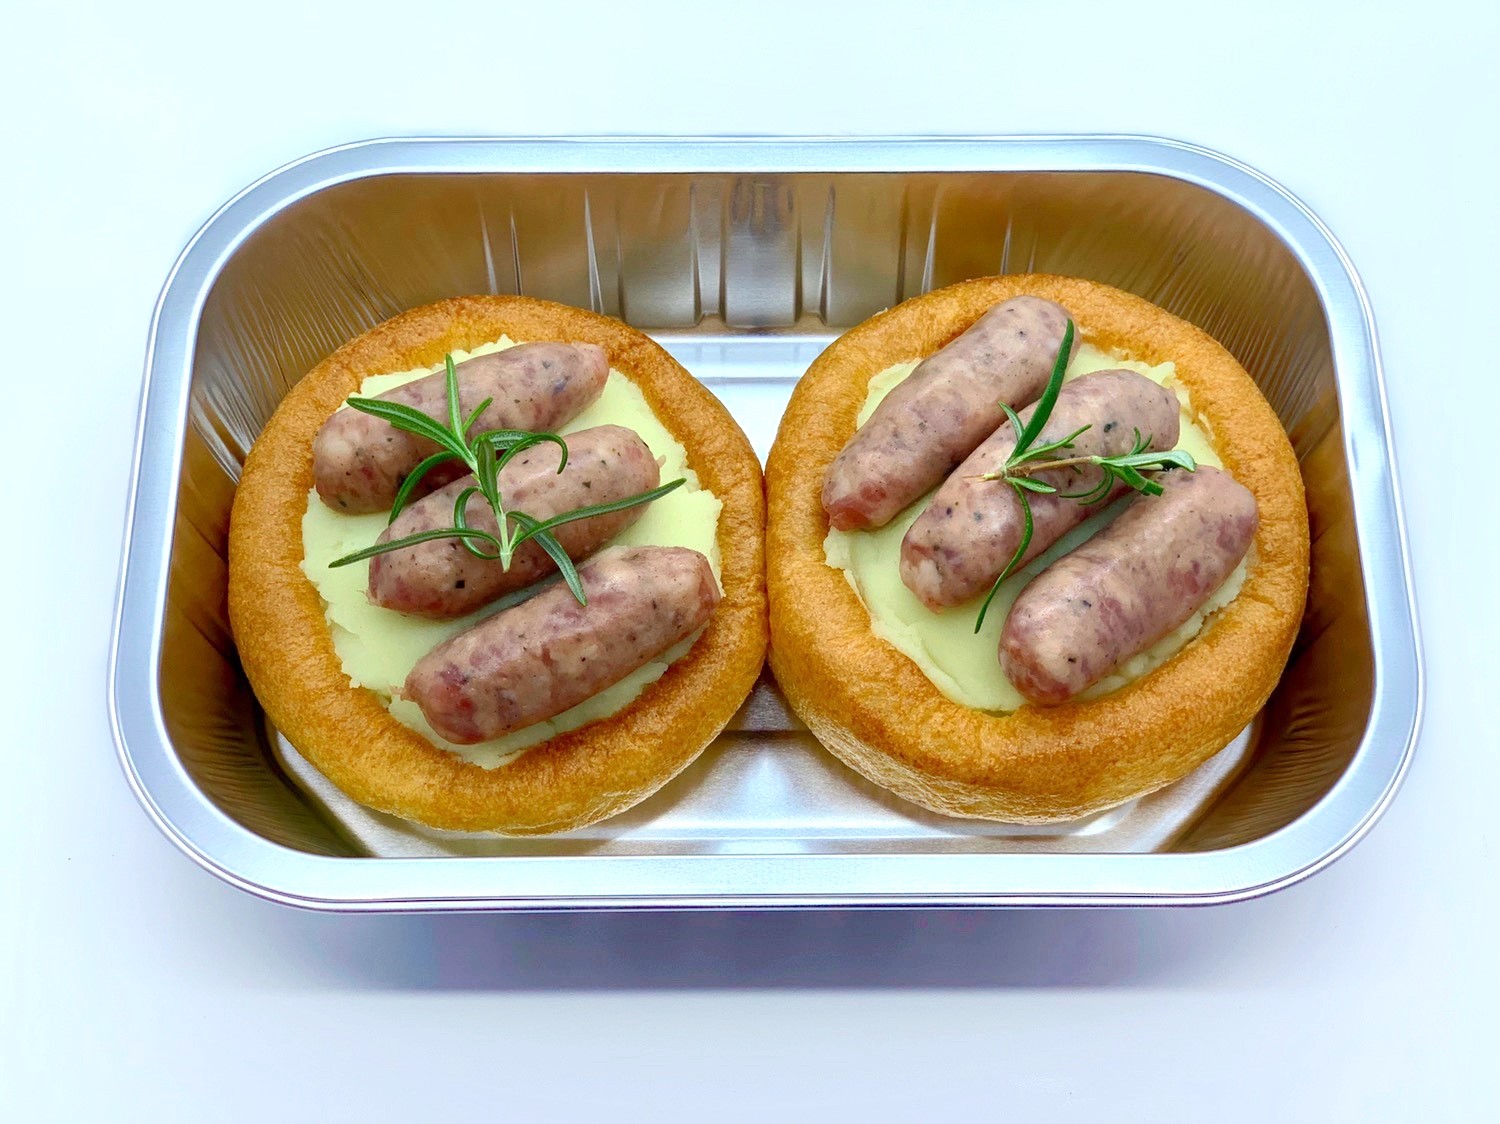 Sausage & mash mini meal